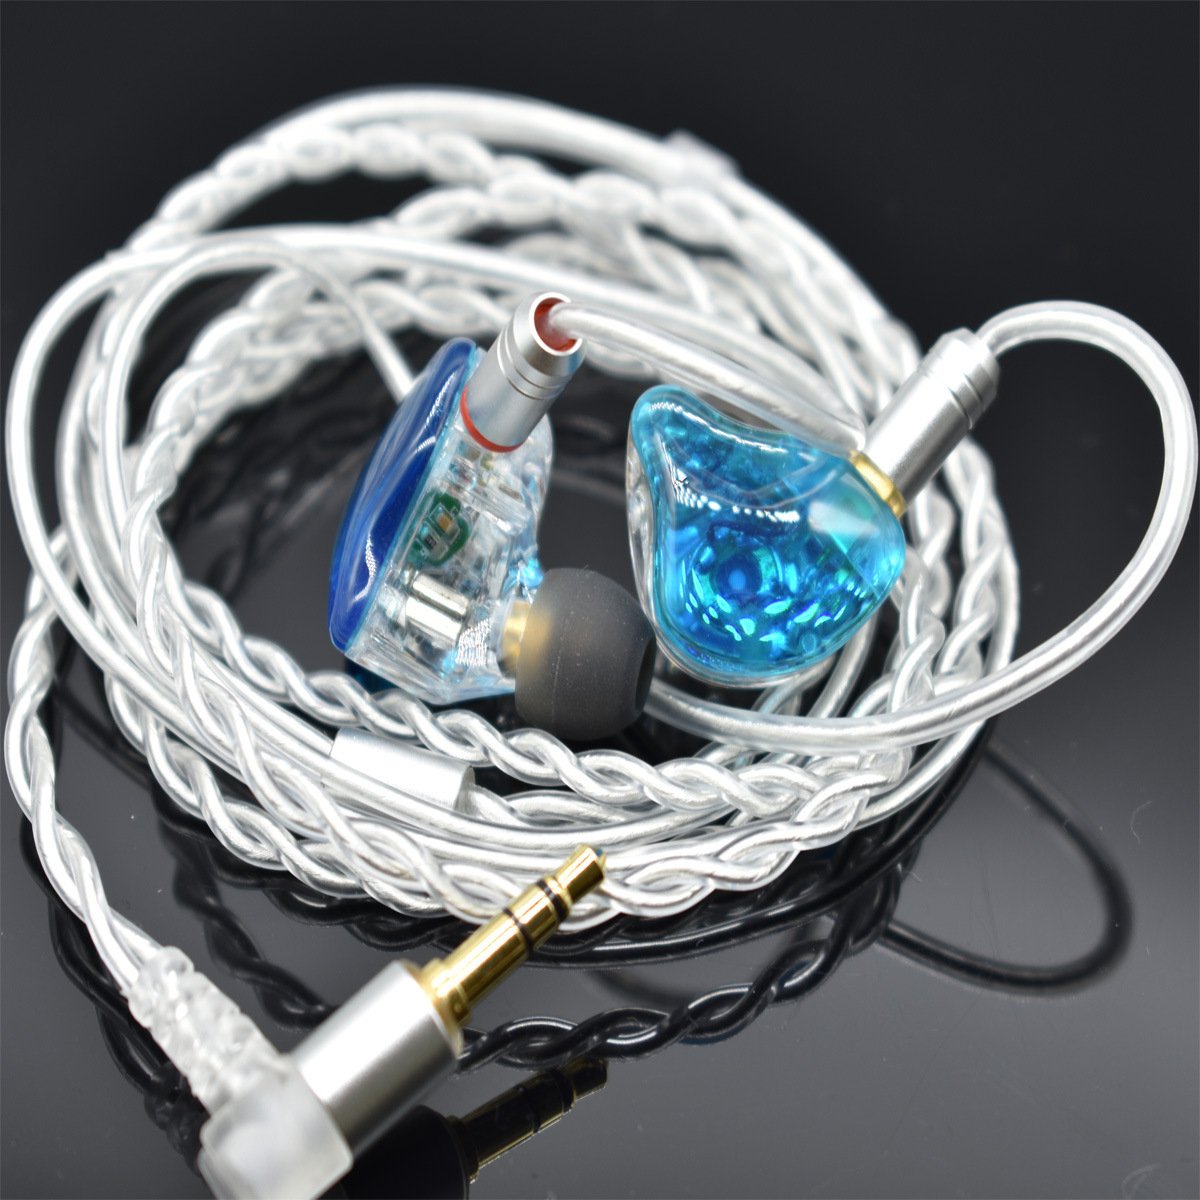 Six-unit ring iron headphones , Headphones corporate gifts , Apex Gift